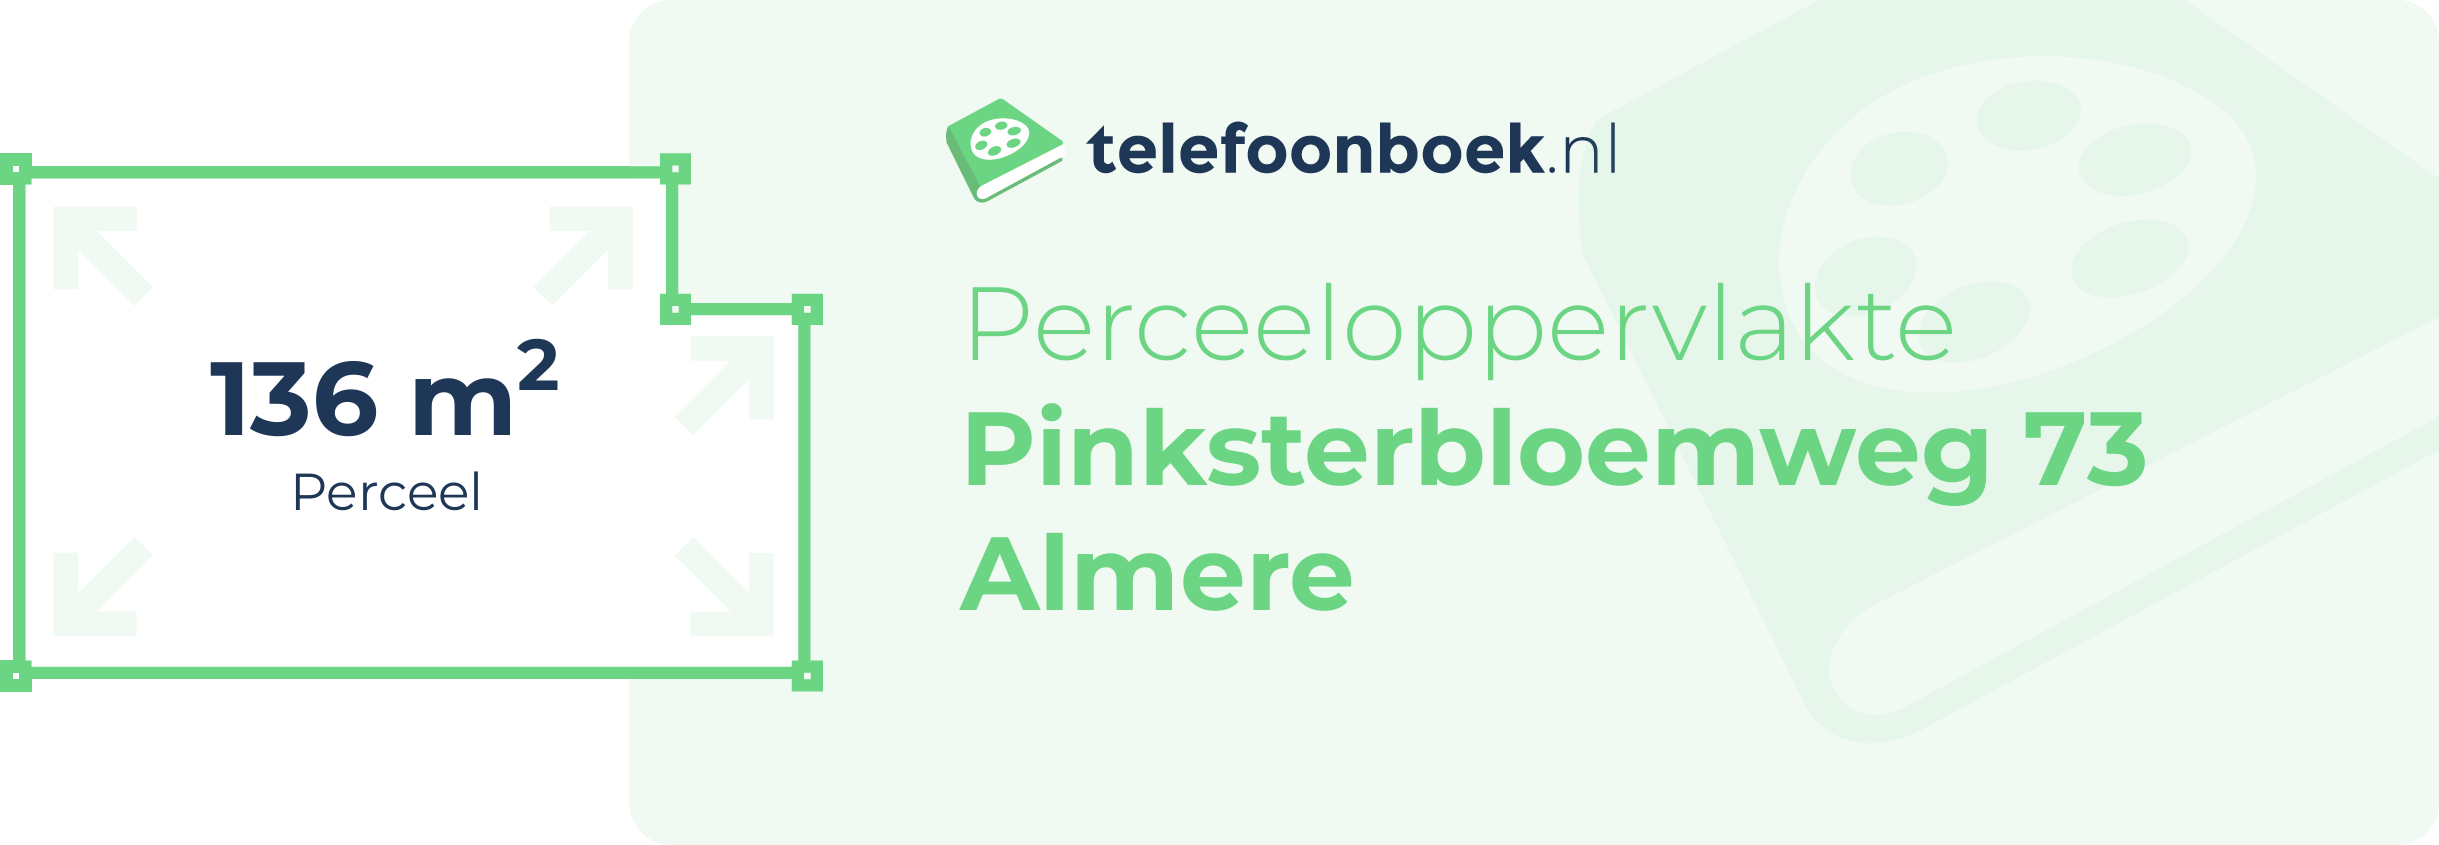 Perceeloppervlakte Pinksterbloemweg 73 Almere